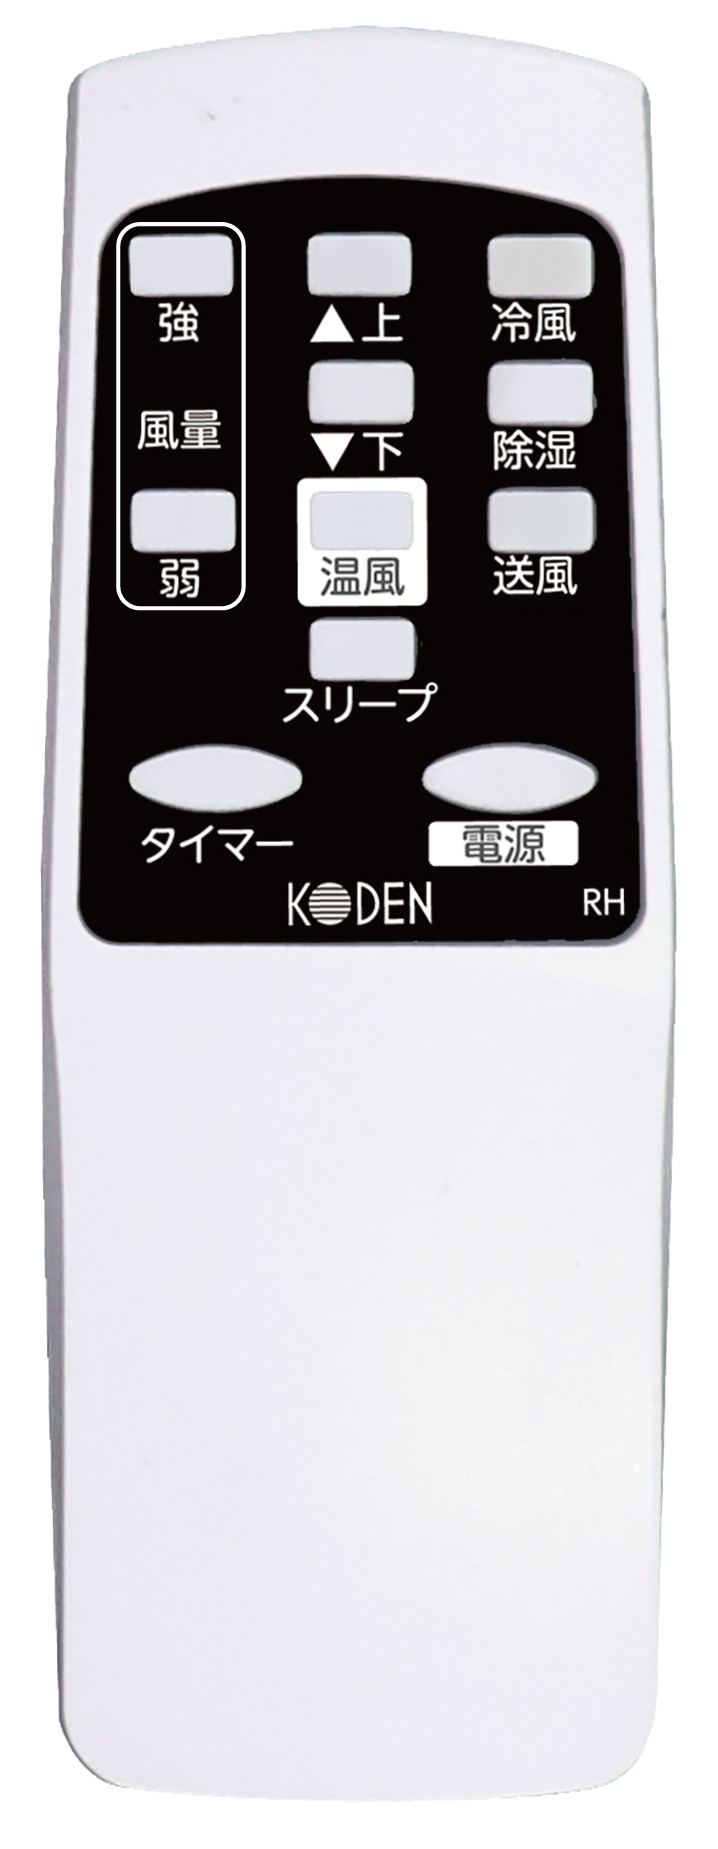 KEP201RH | 移動式エアコン 冷風/温風タイプ ノンドレン方式 | KODEN 